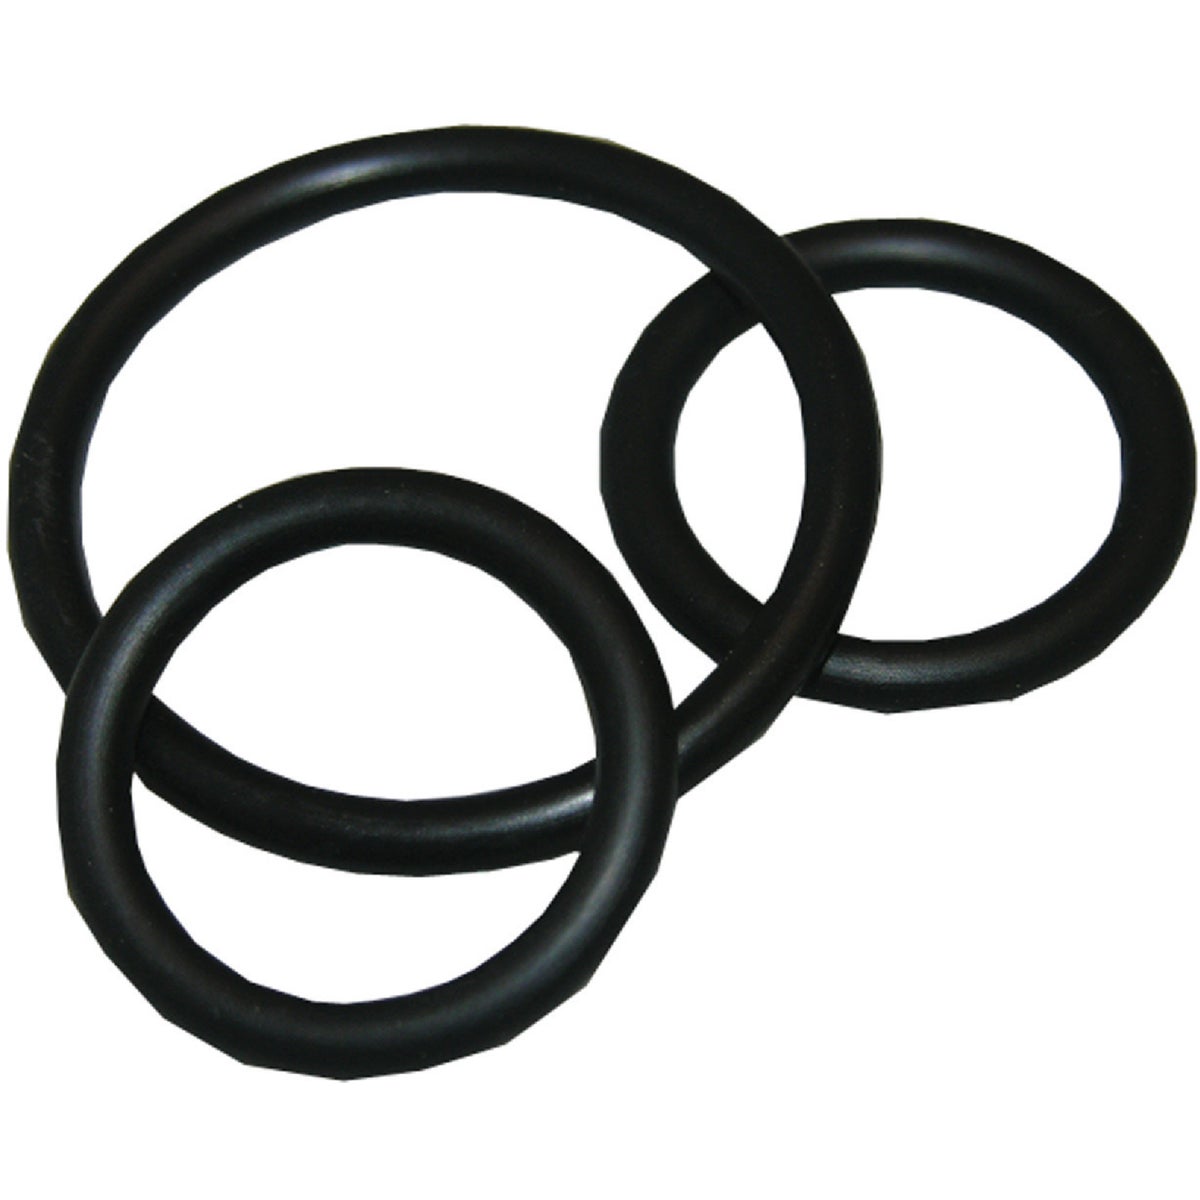 Lasco 3 Various Size O-Ring Kit For Moen Faucet